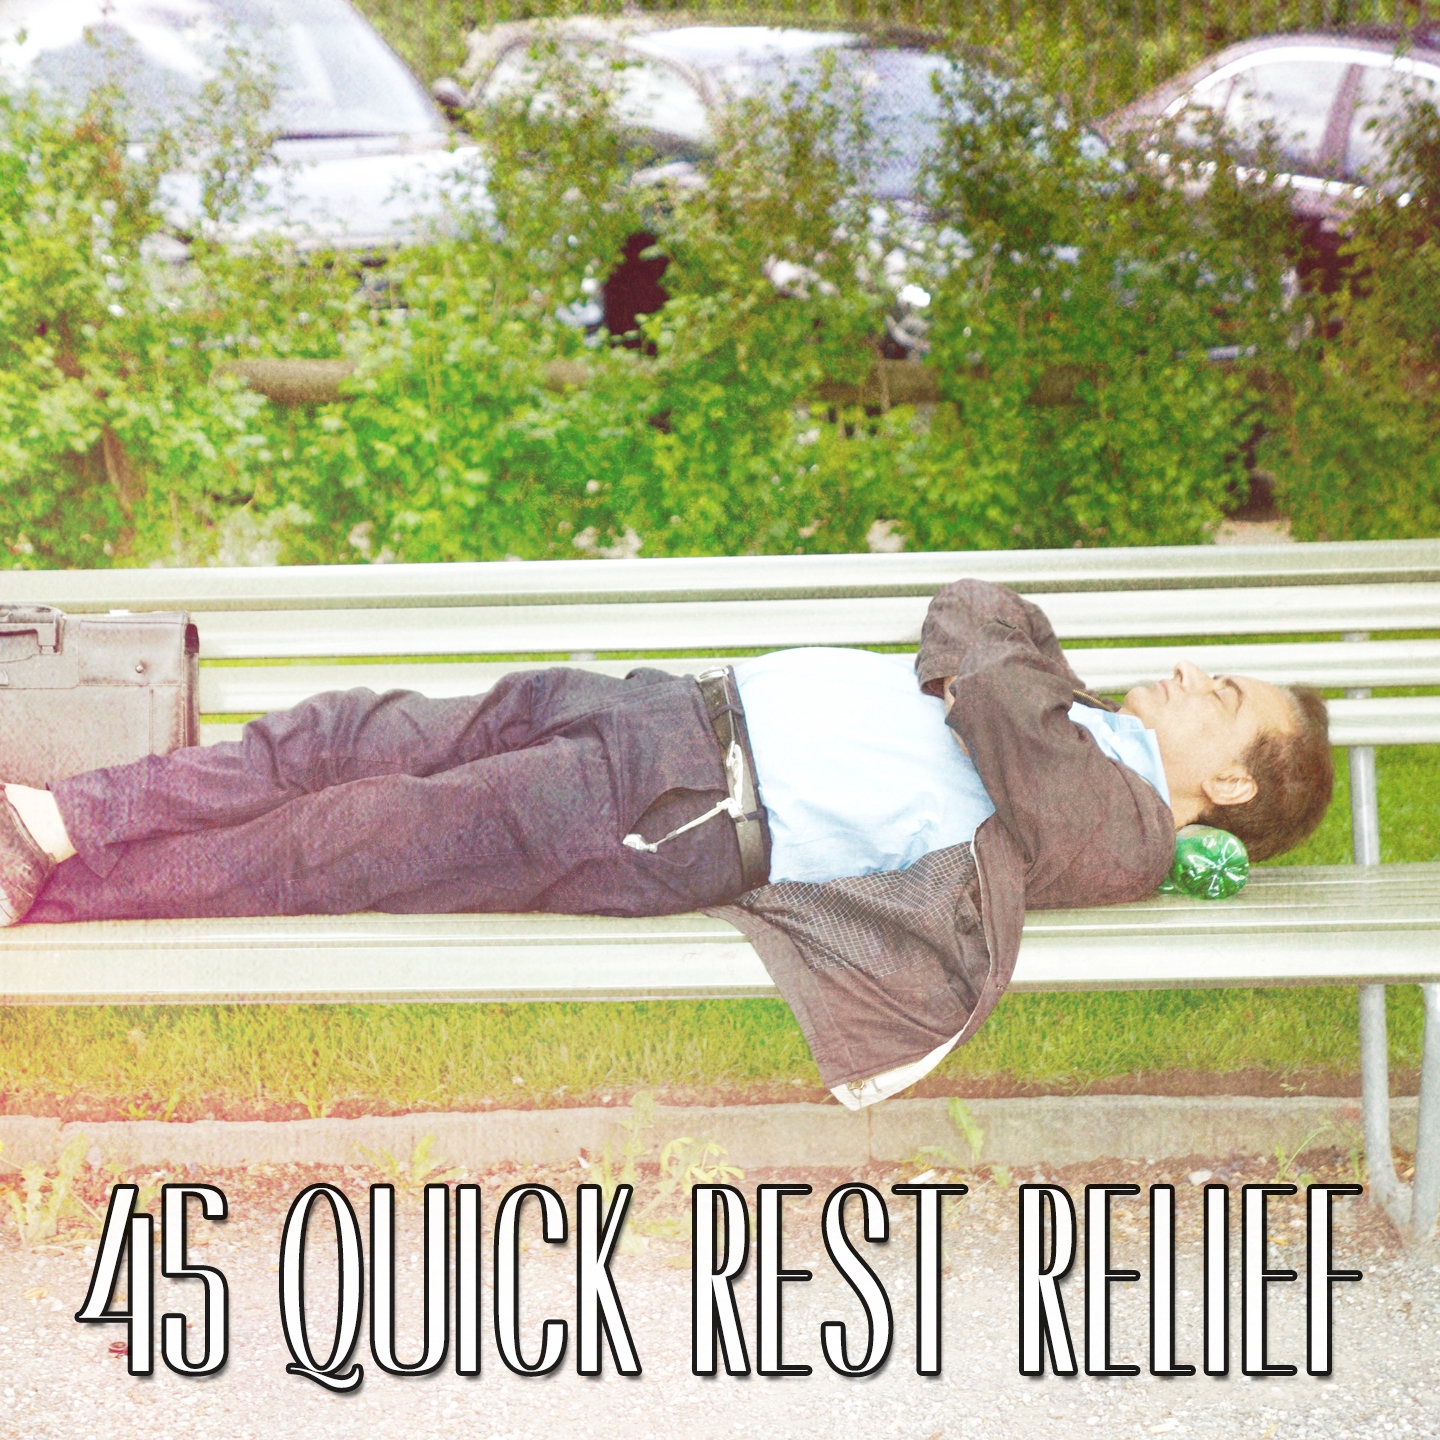 45 Quick Rest Relief